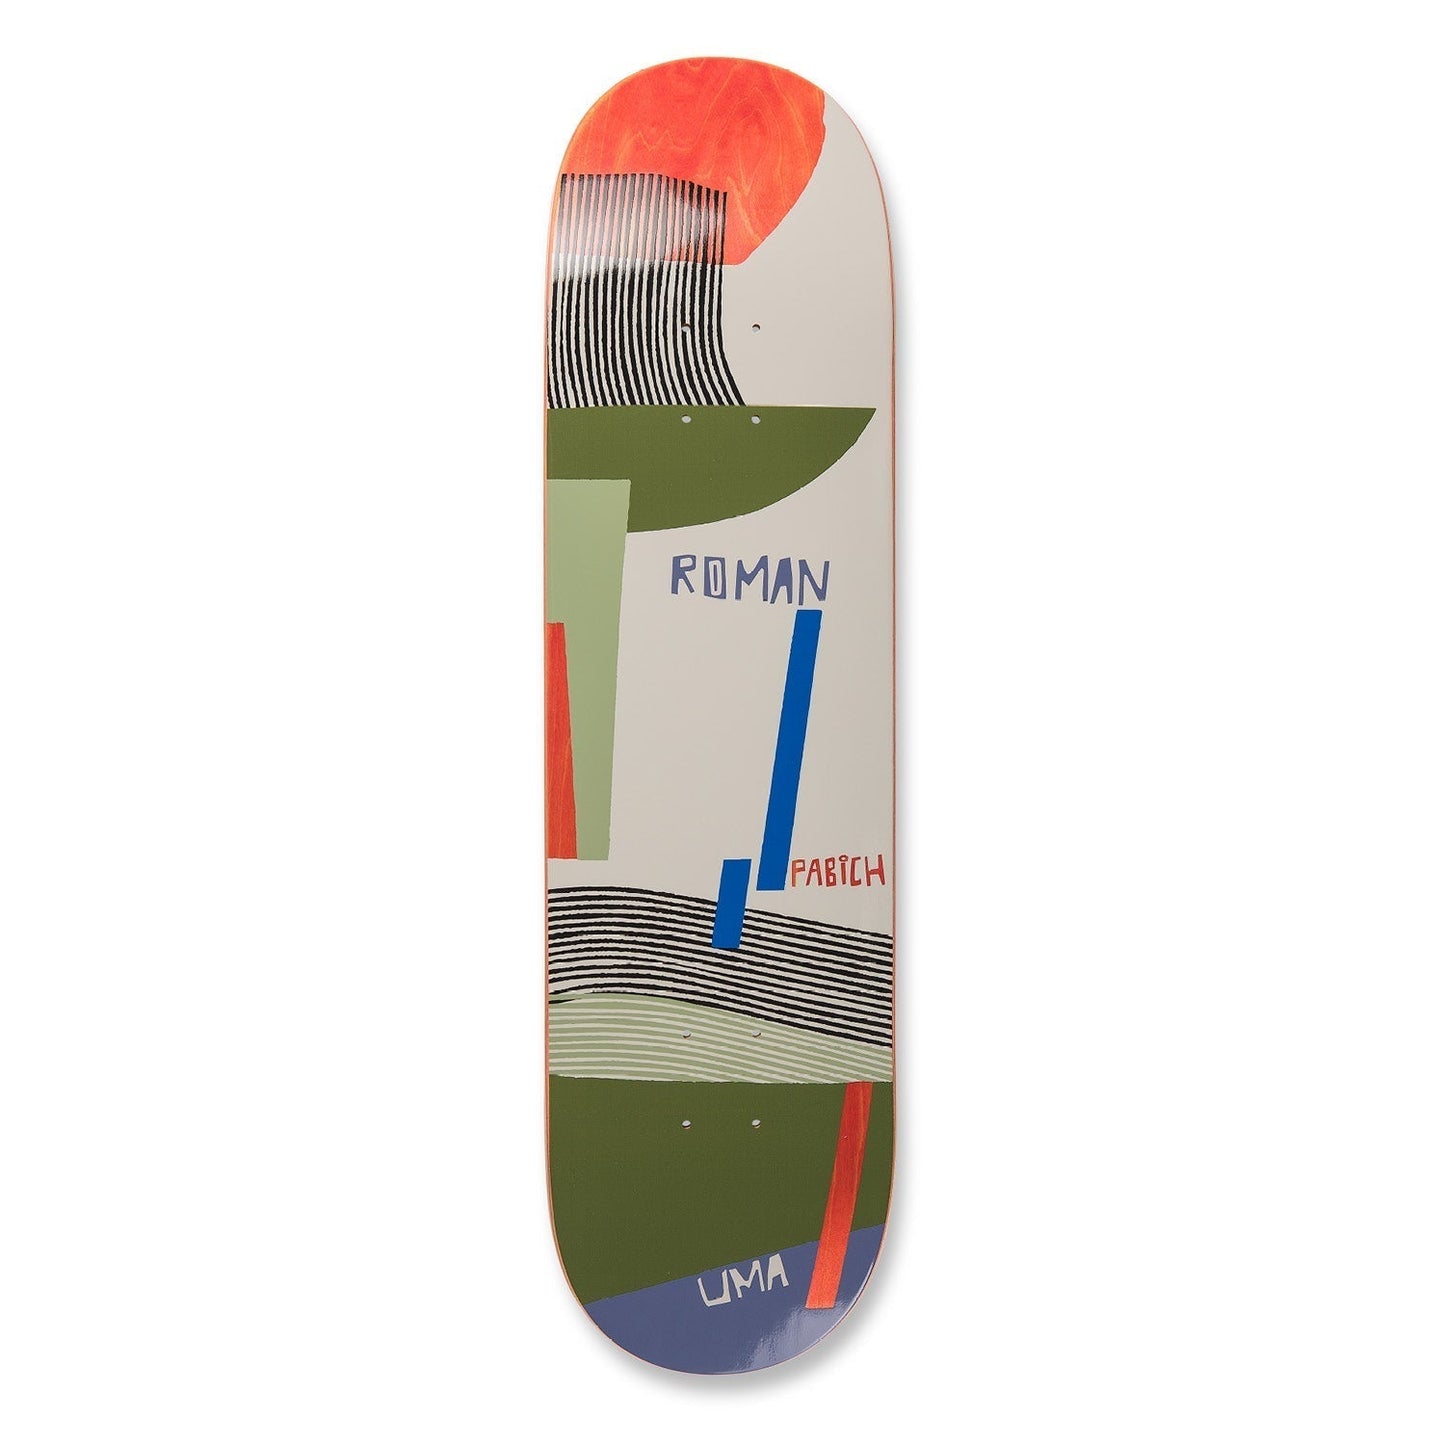 UMA 'Undercurrent Roman' 8.25" skateboard deck - Custom Skateboard Builder - SkatebruhSG